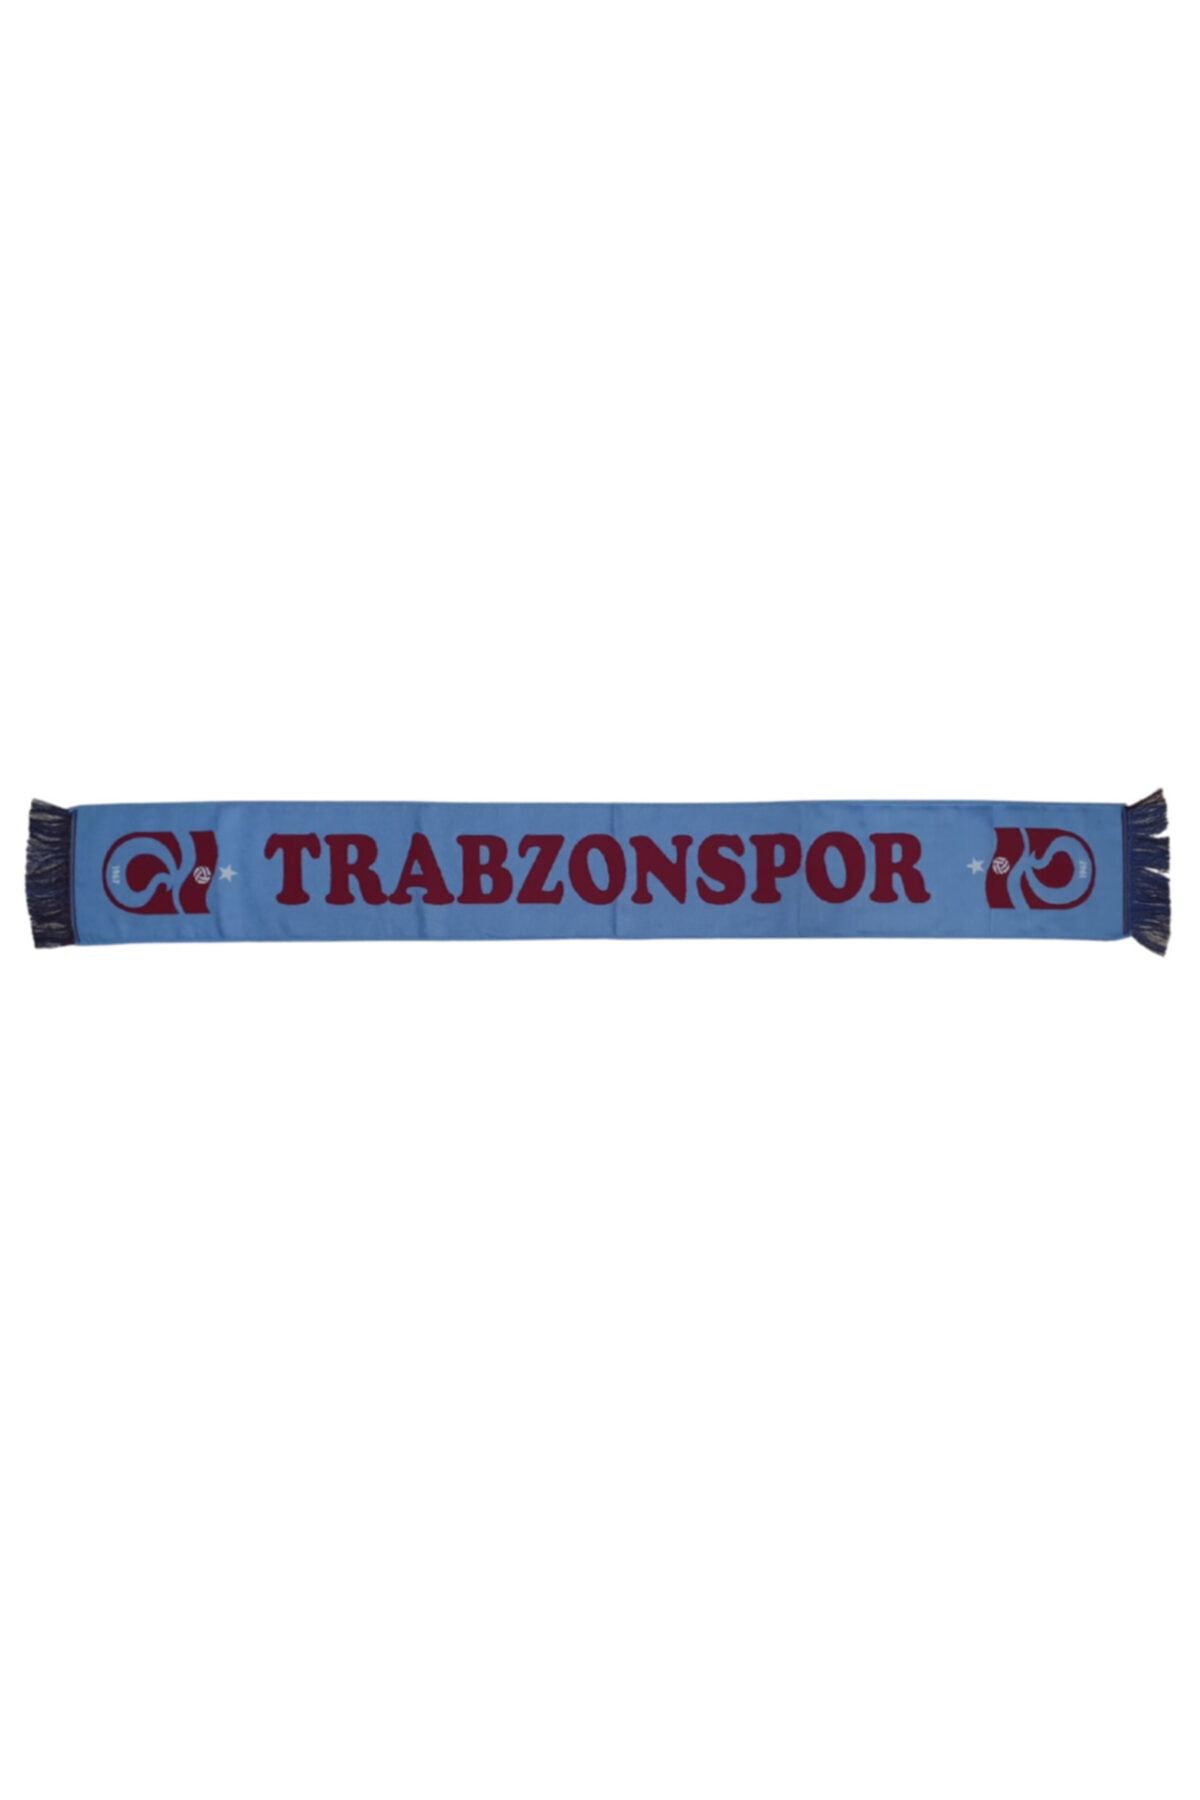 Trabzonspor Lisanslı Dokuma Atkı